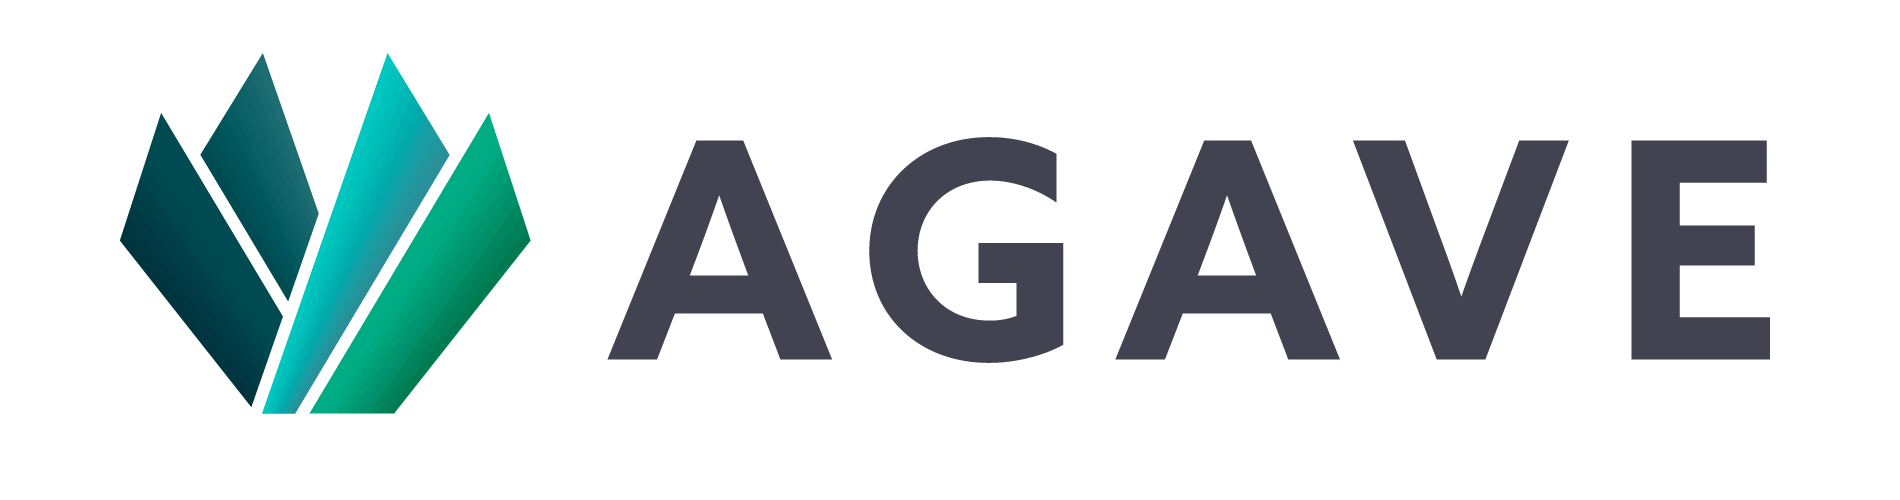 agave_logo-1